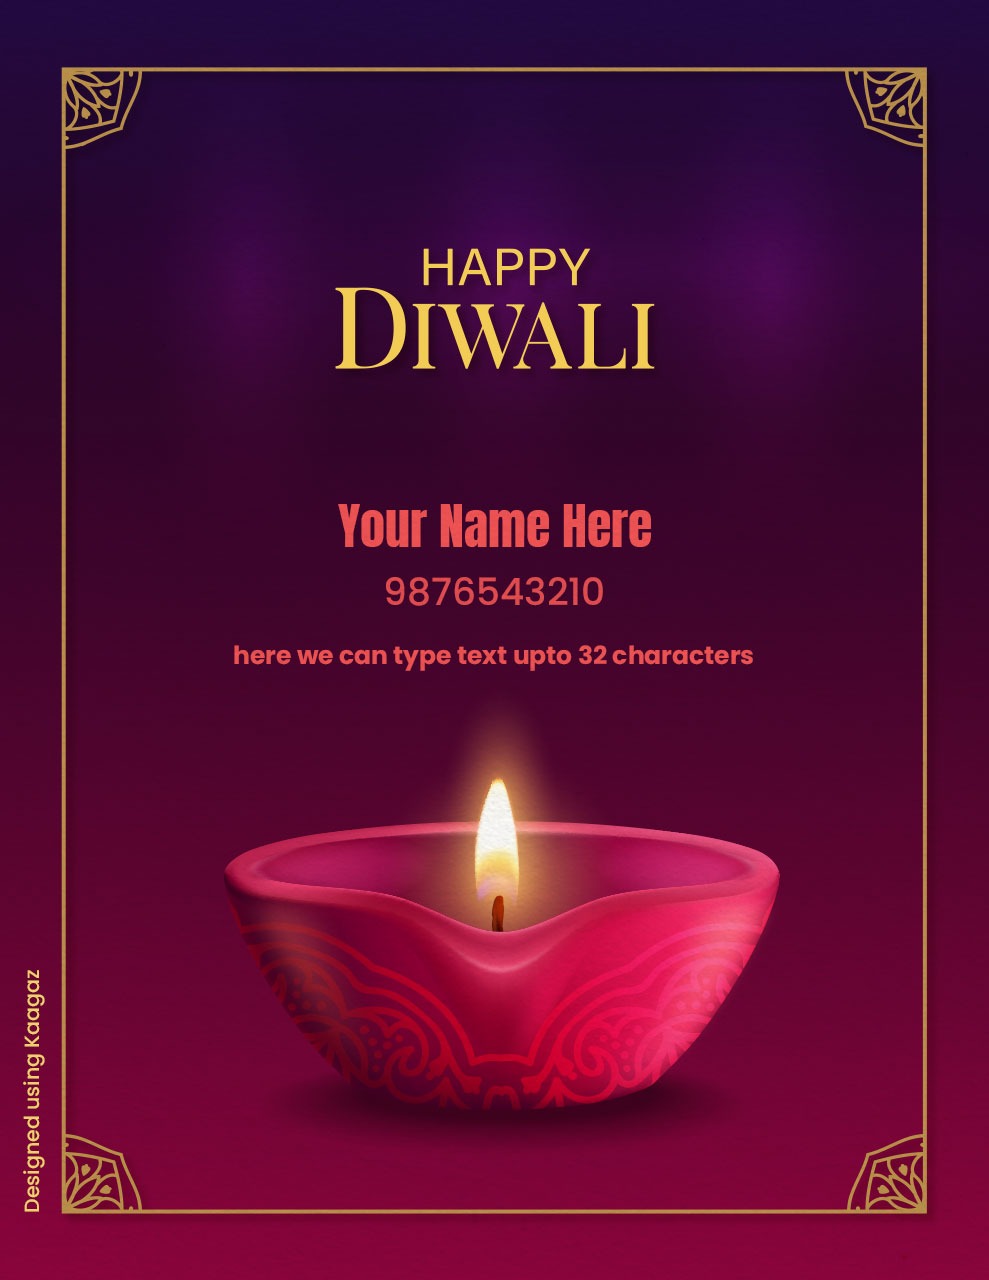 Wishing you a bright and happy Deepawali